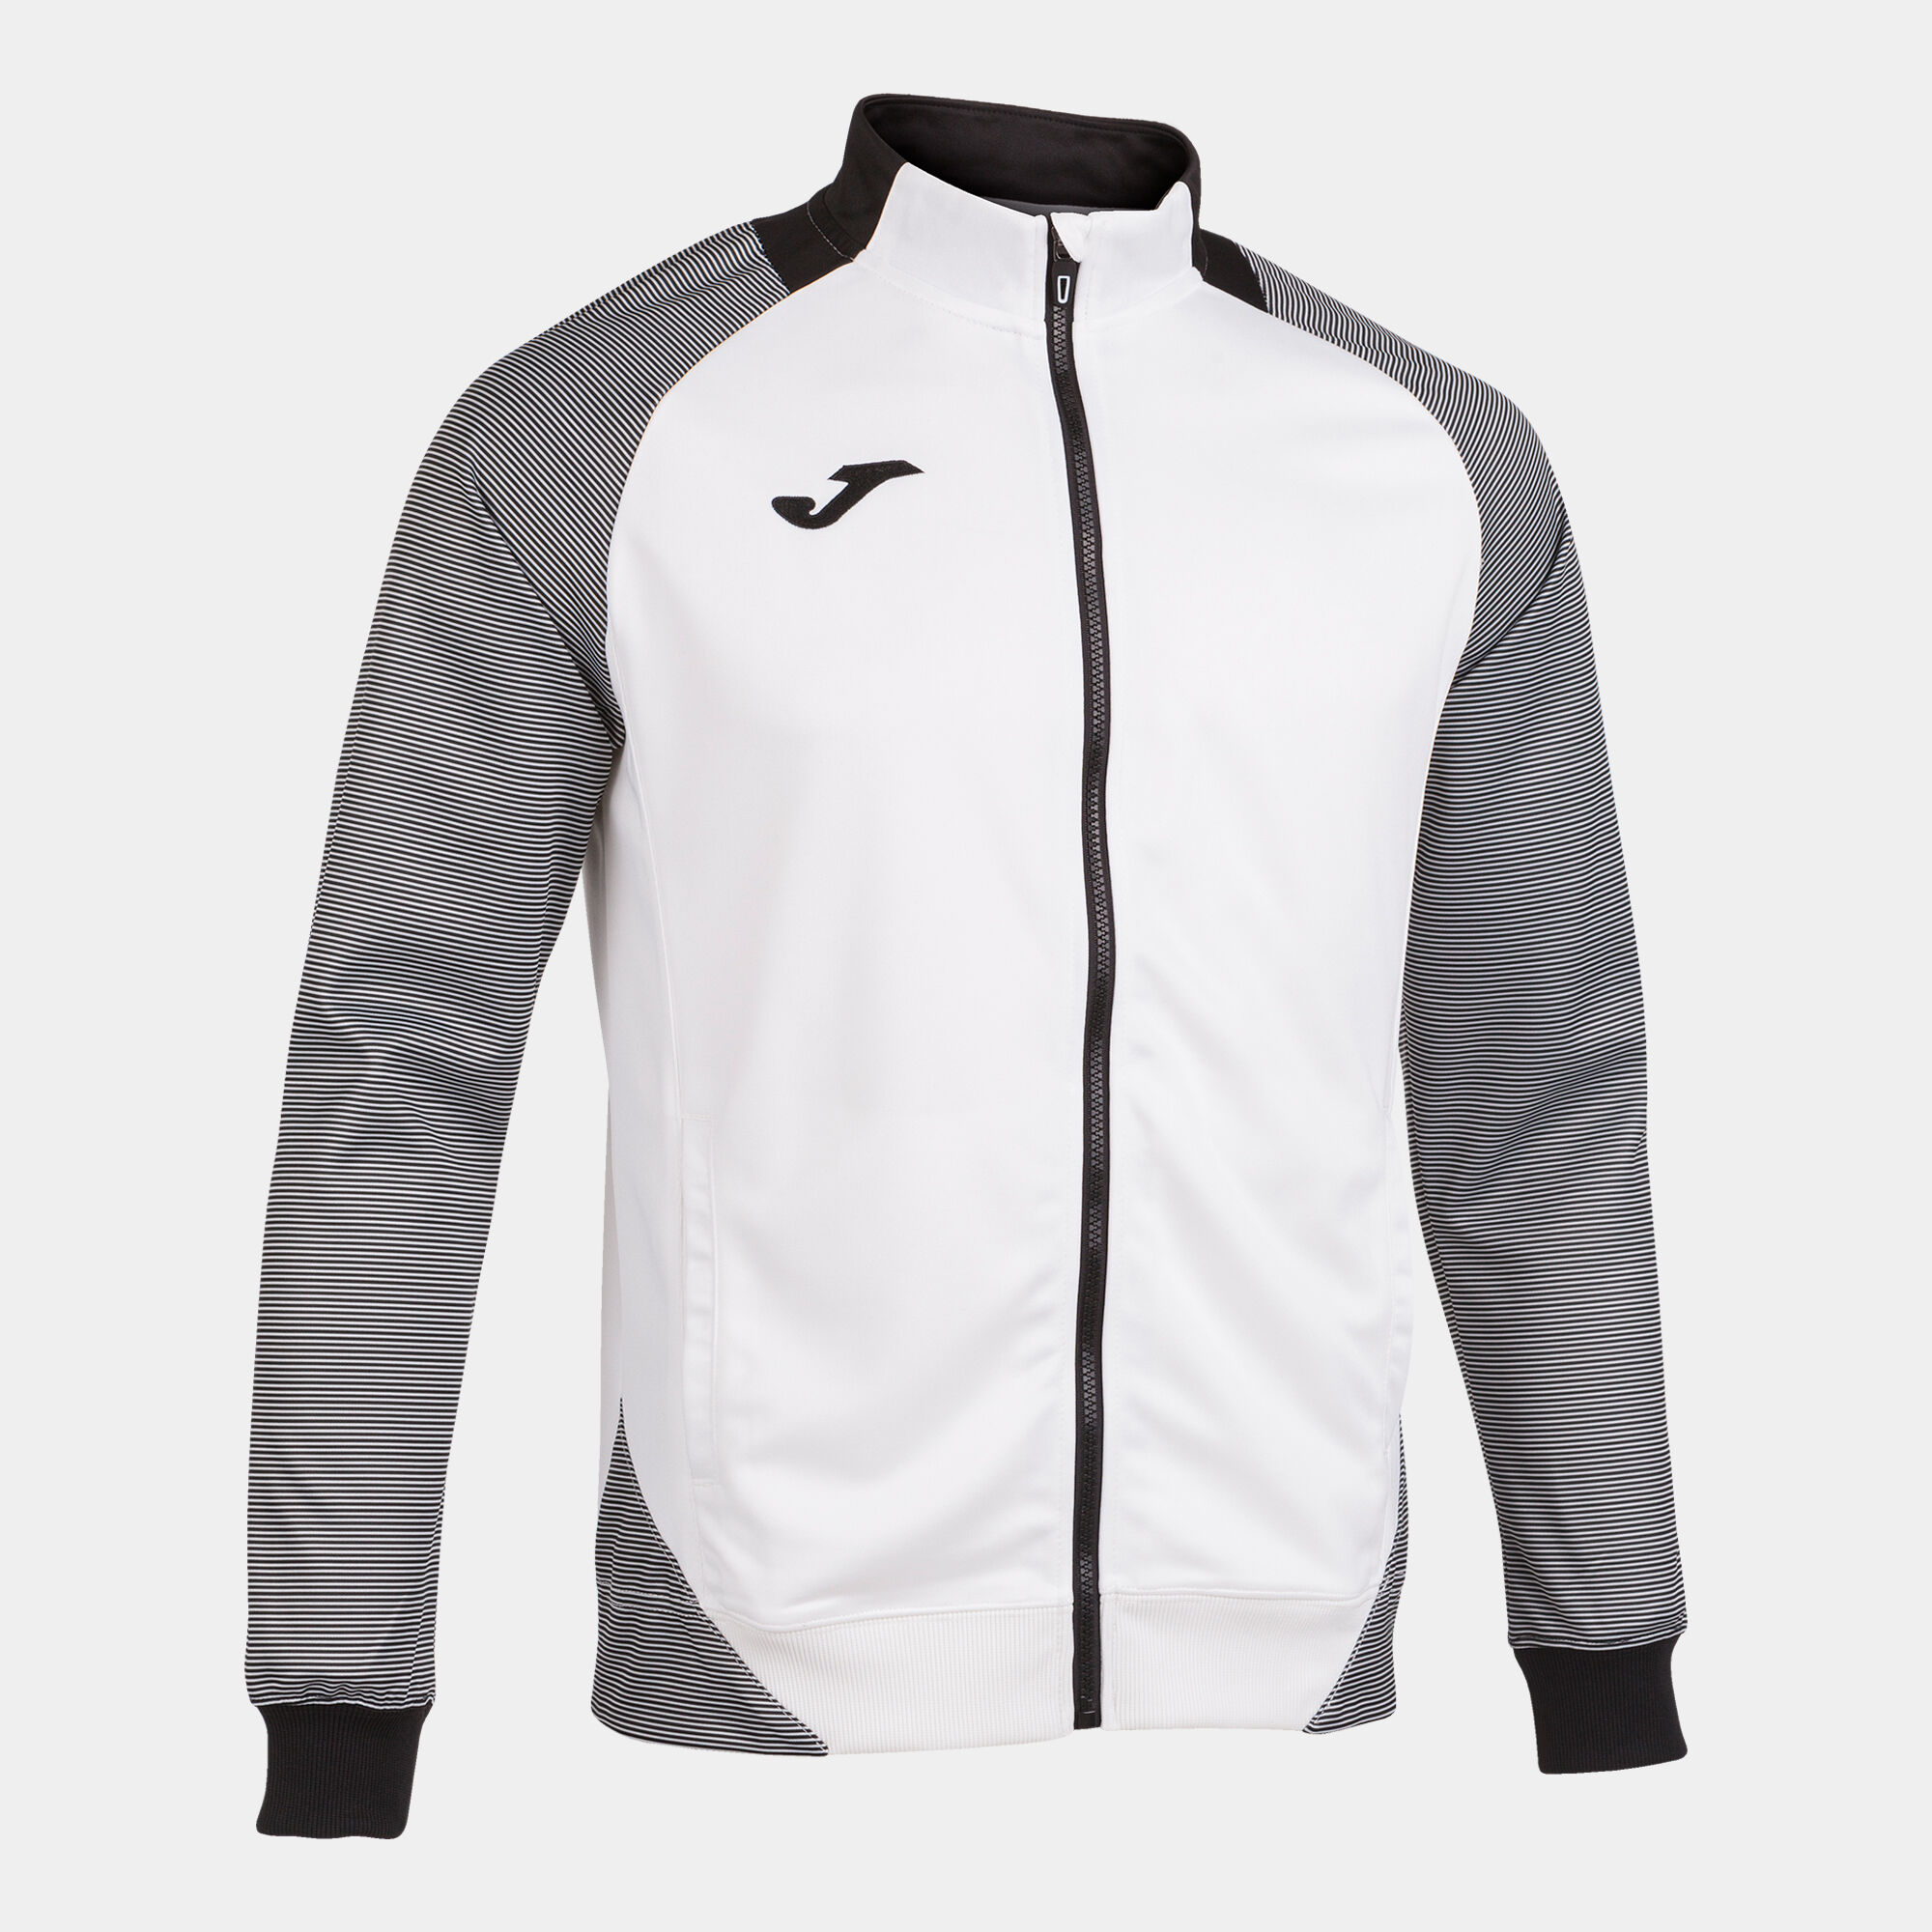 Jachetă bărbaȚi Essential II alb negru